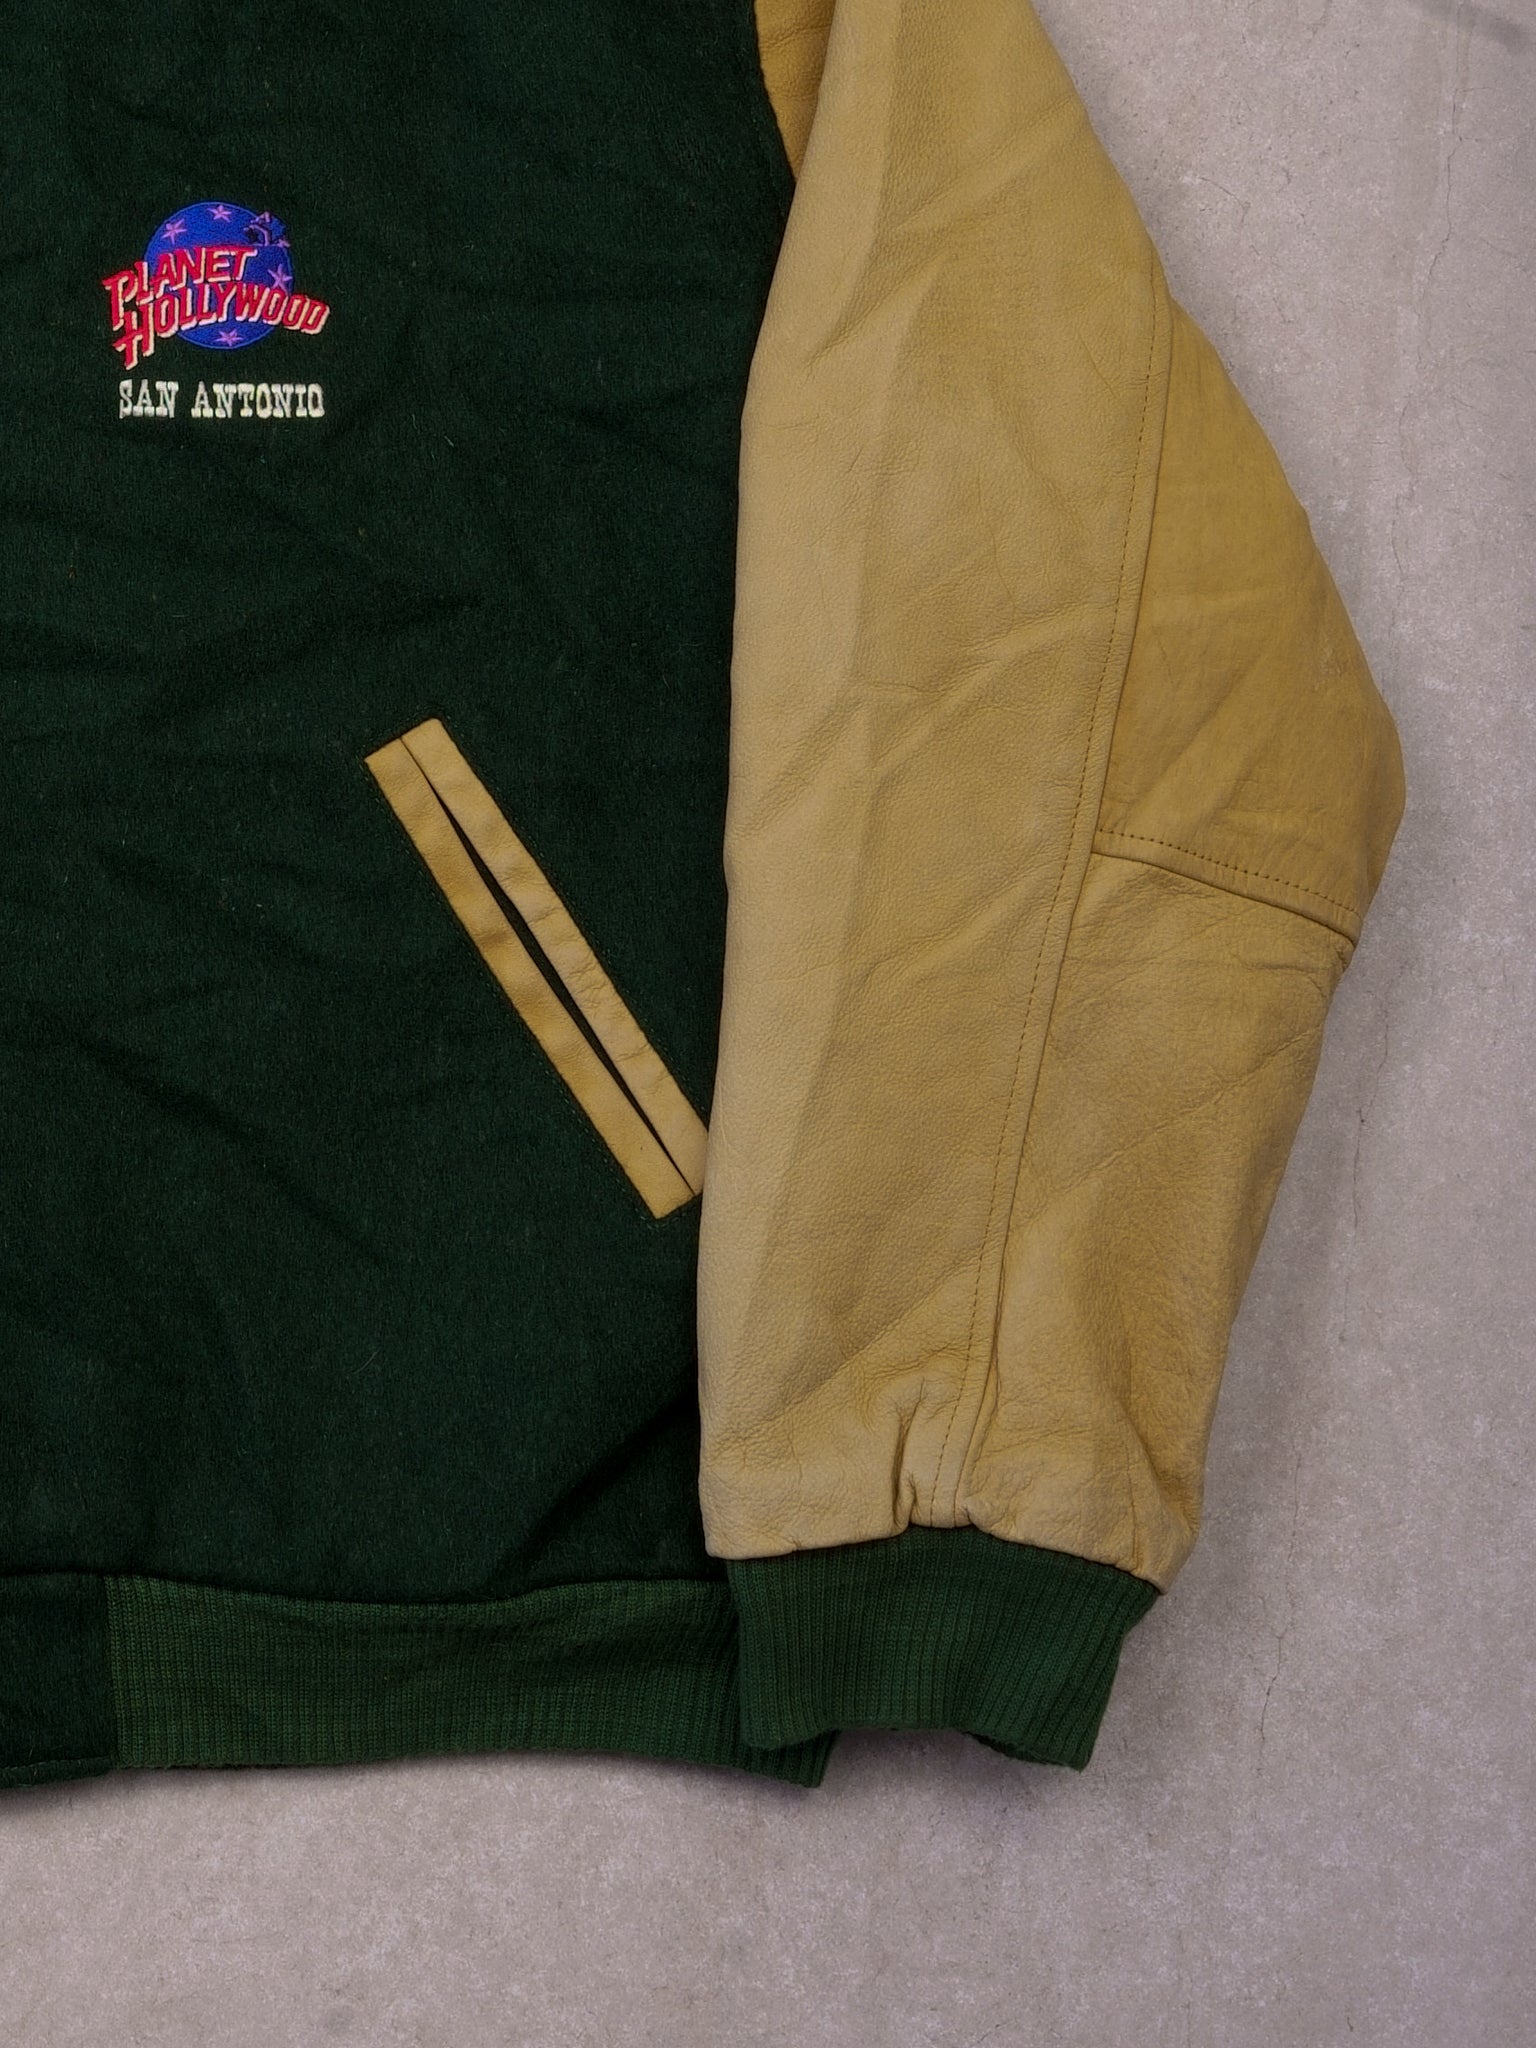 Vintage 90s Pine Green and Cream San Antonio Dragons Planet Hollywood Varsity Jacket (XL)